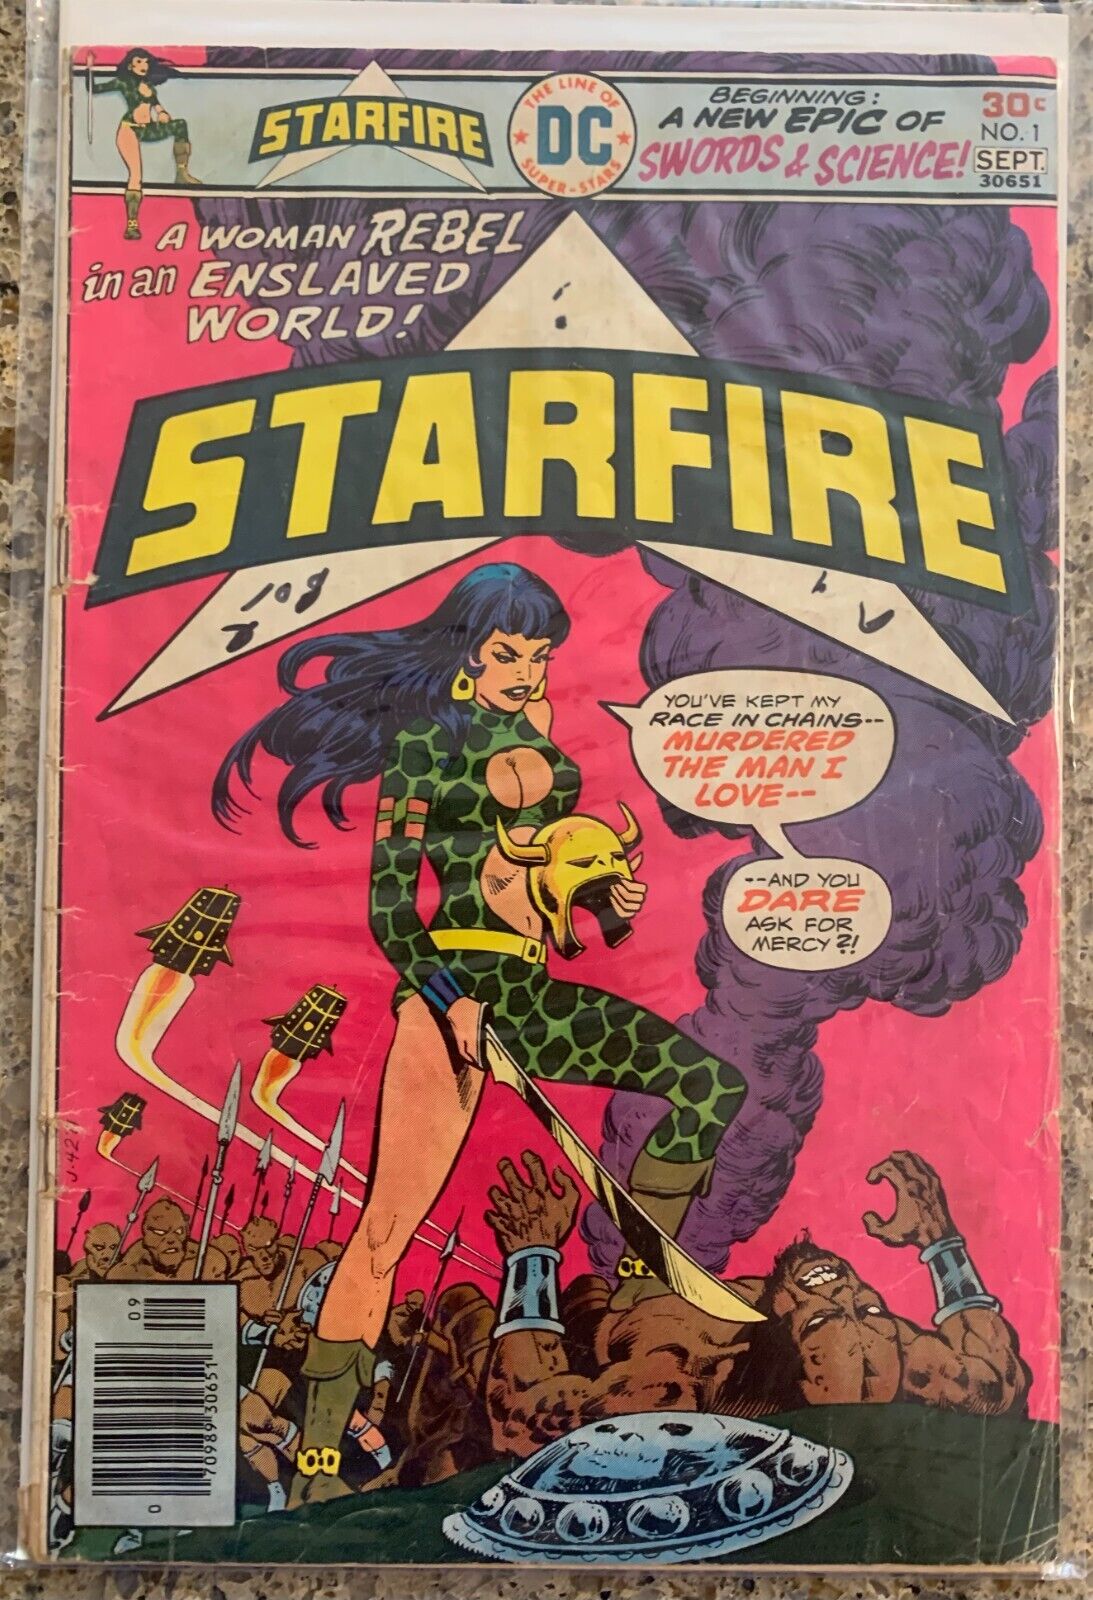 DC Comics: Starfire (1976), Issue 1